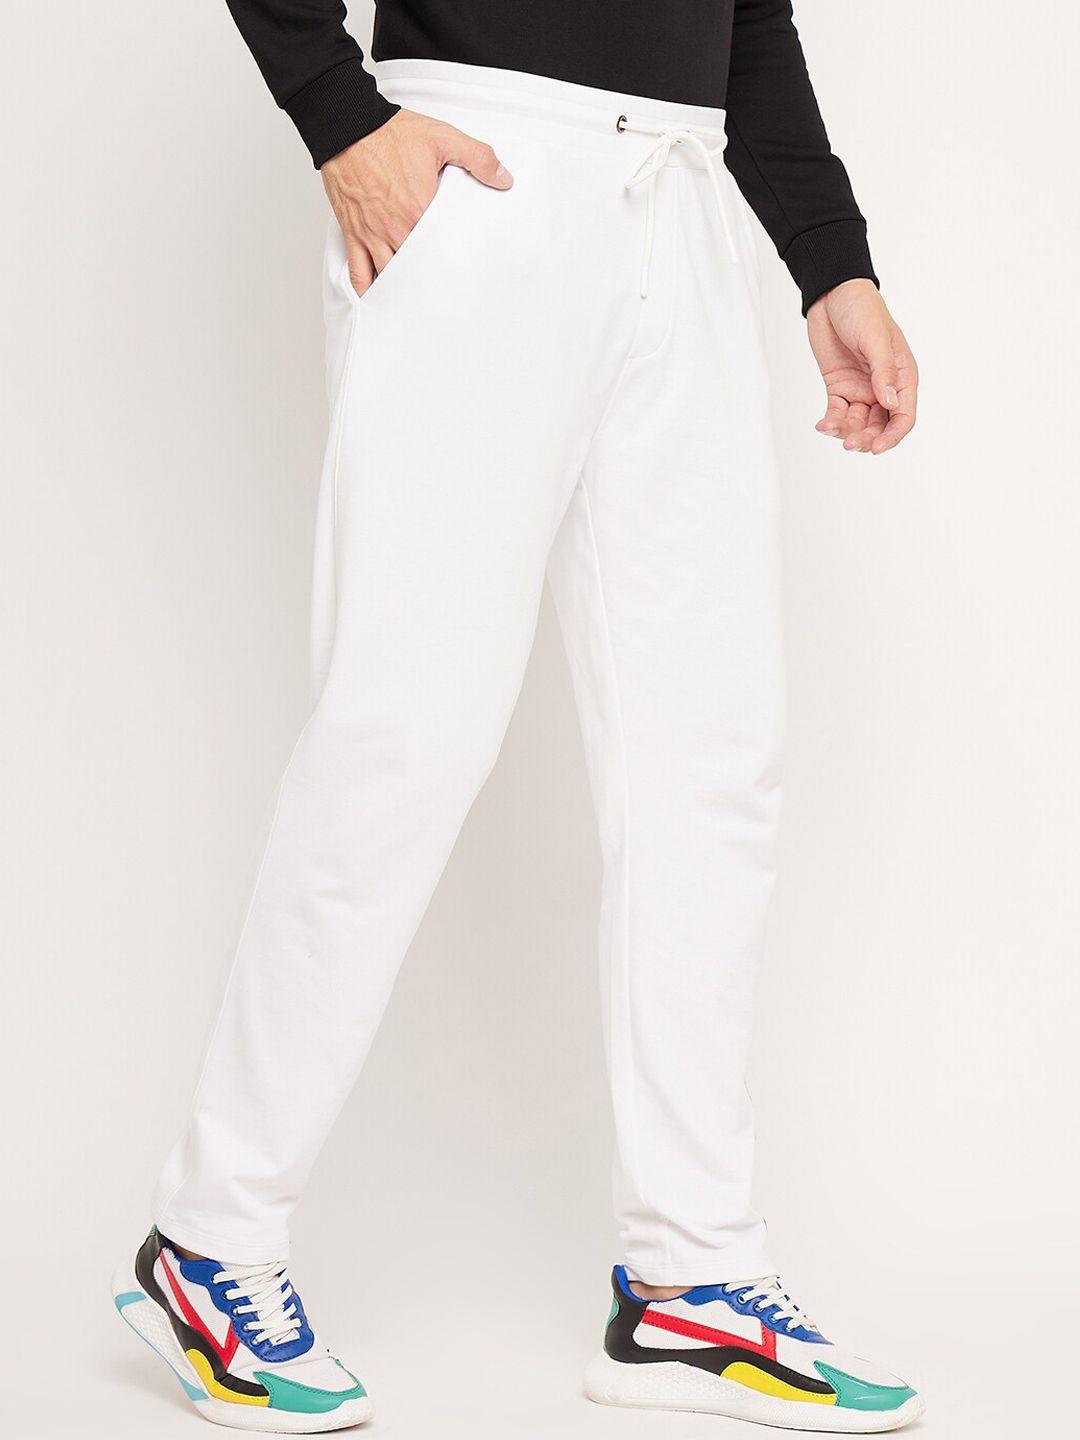 edrio-men-mid-rise-straight-fit-cotton-track-pants